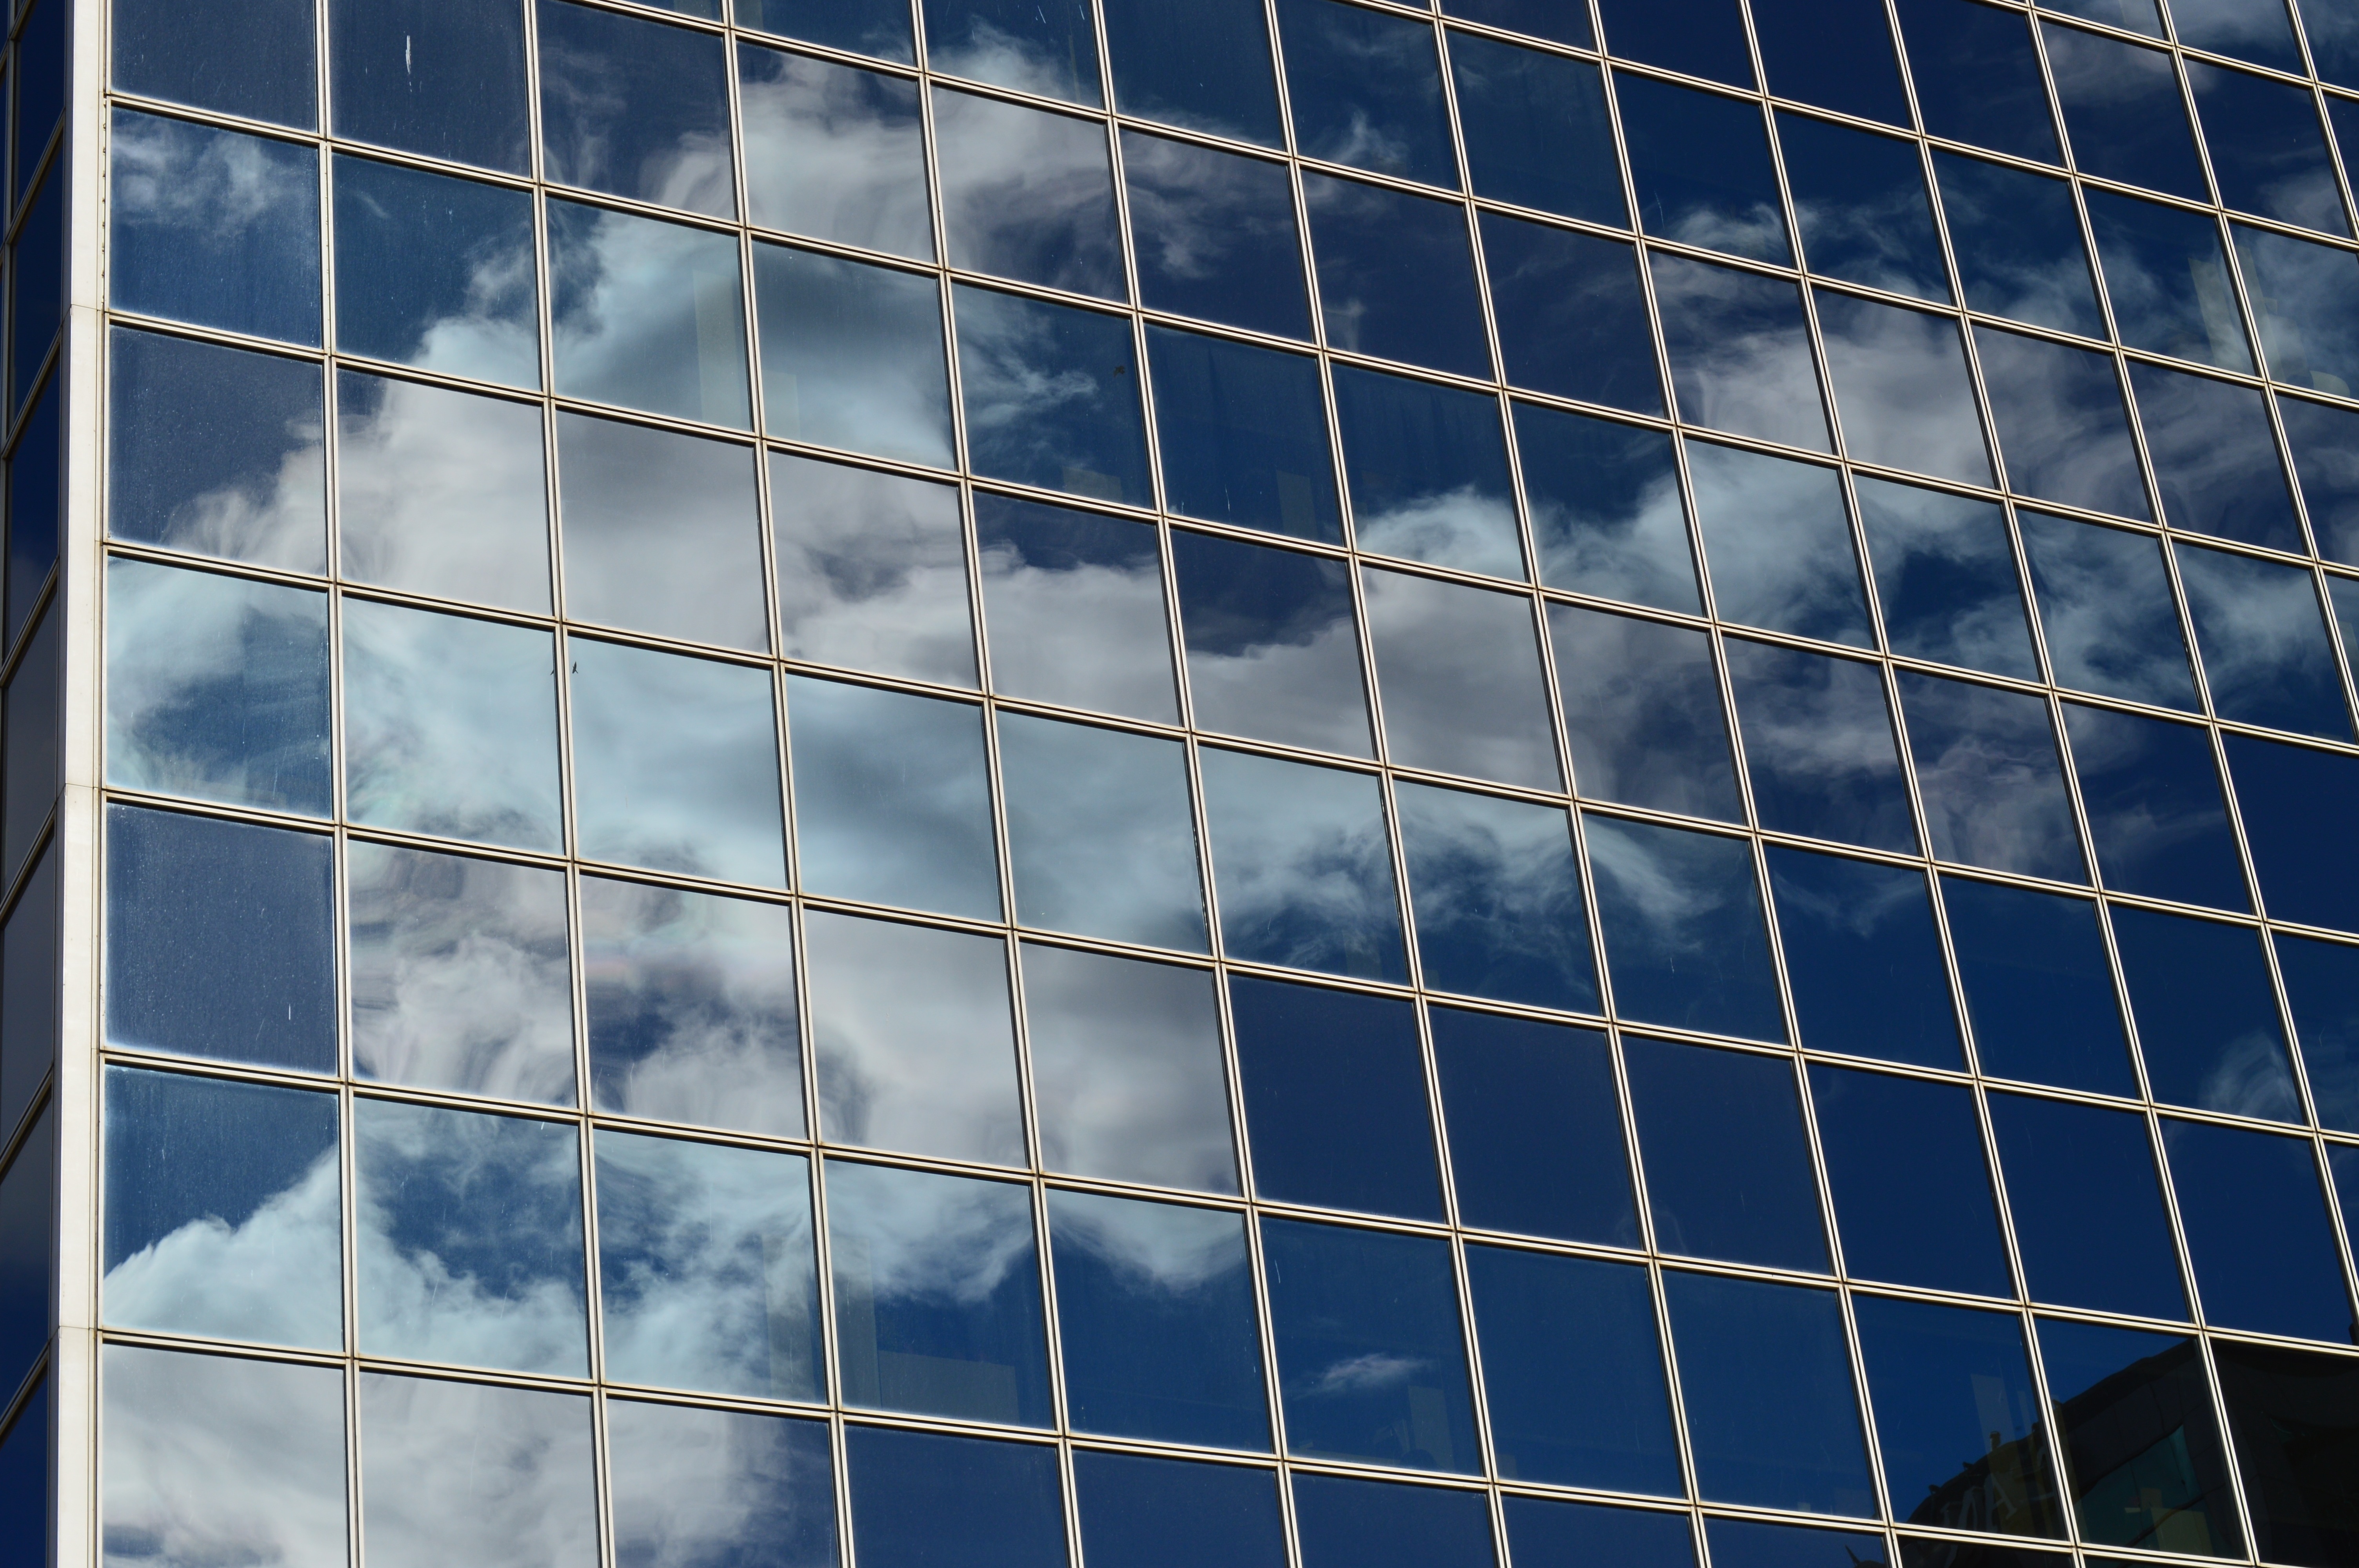 Building, Clouds, Reflection, Glass, blue, cloud - sky